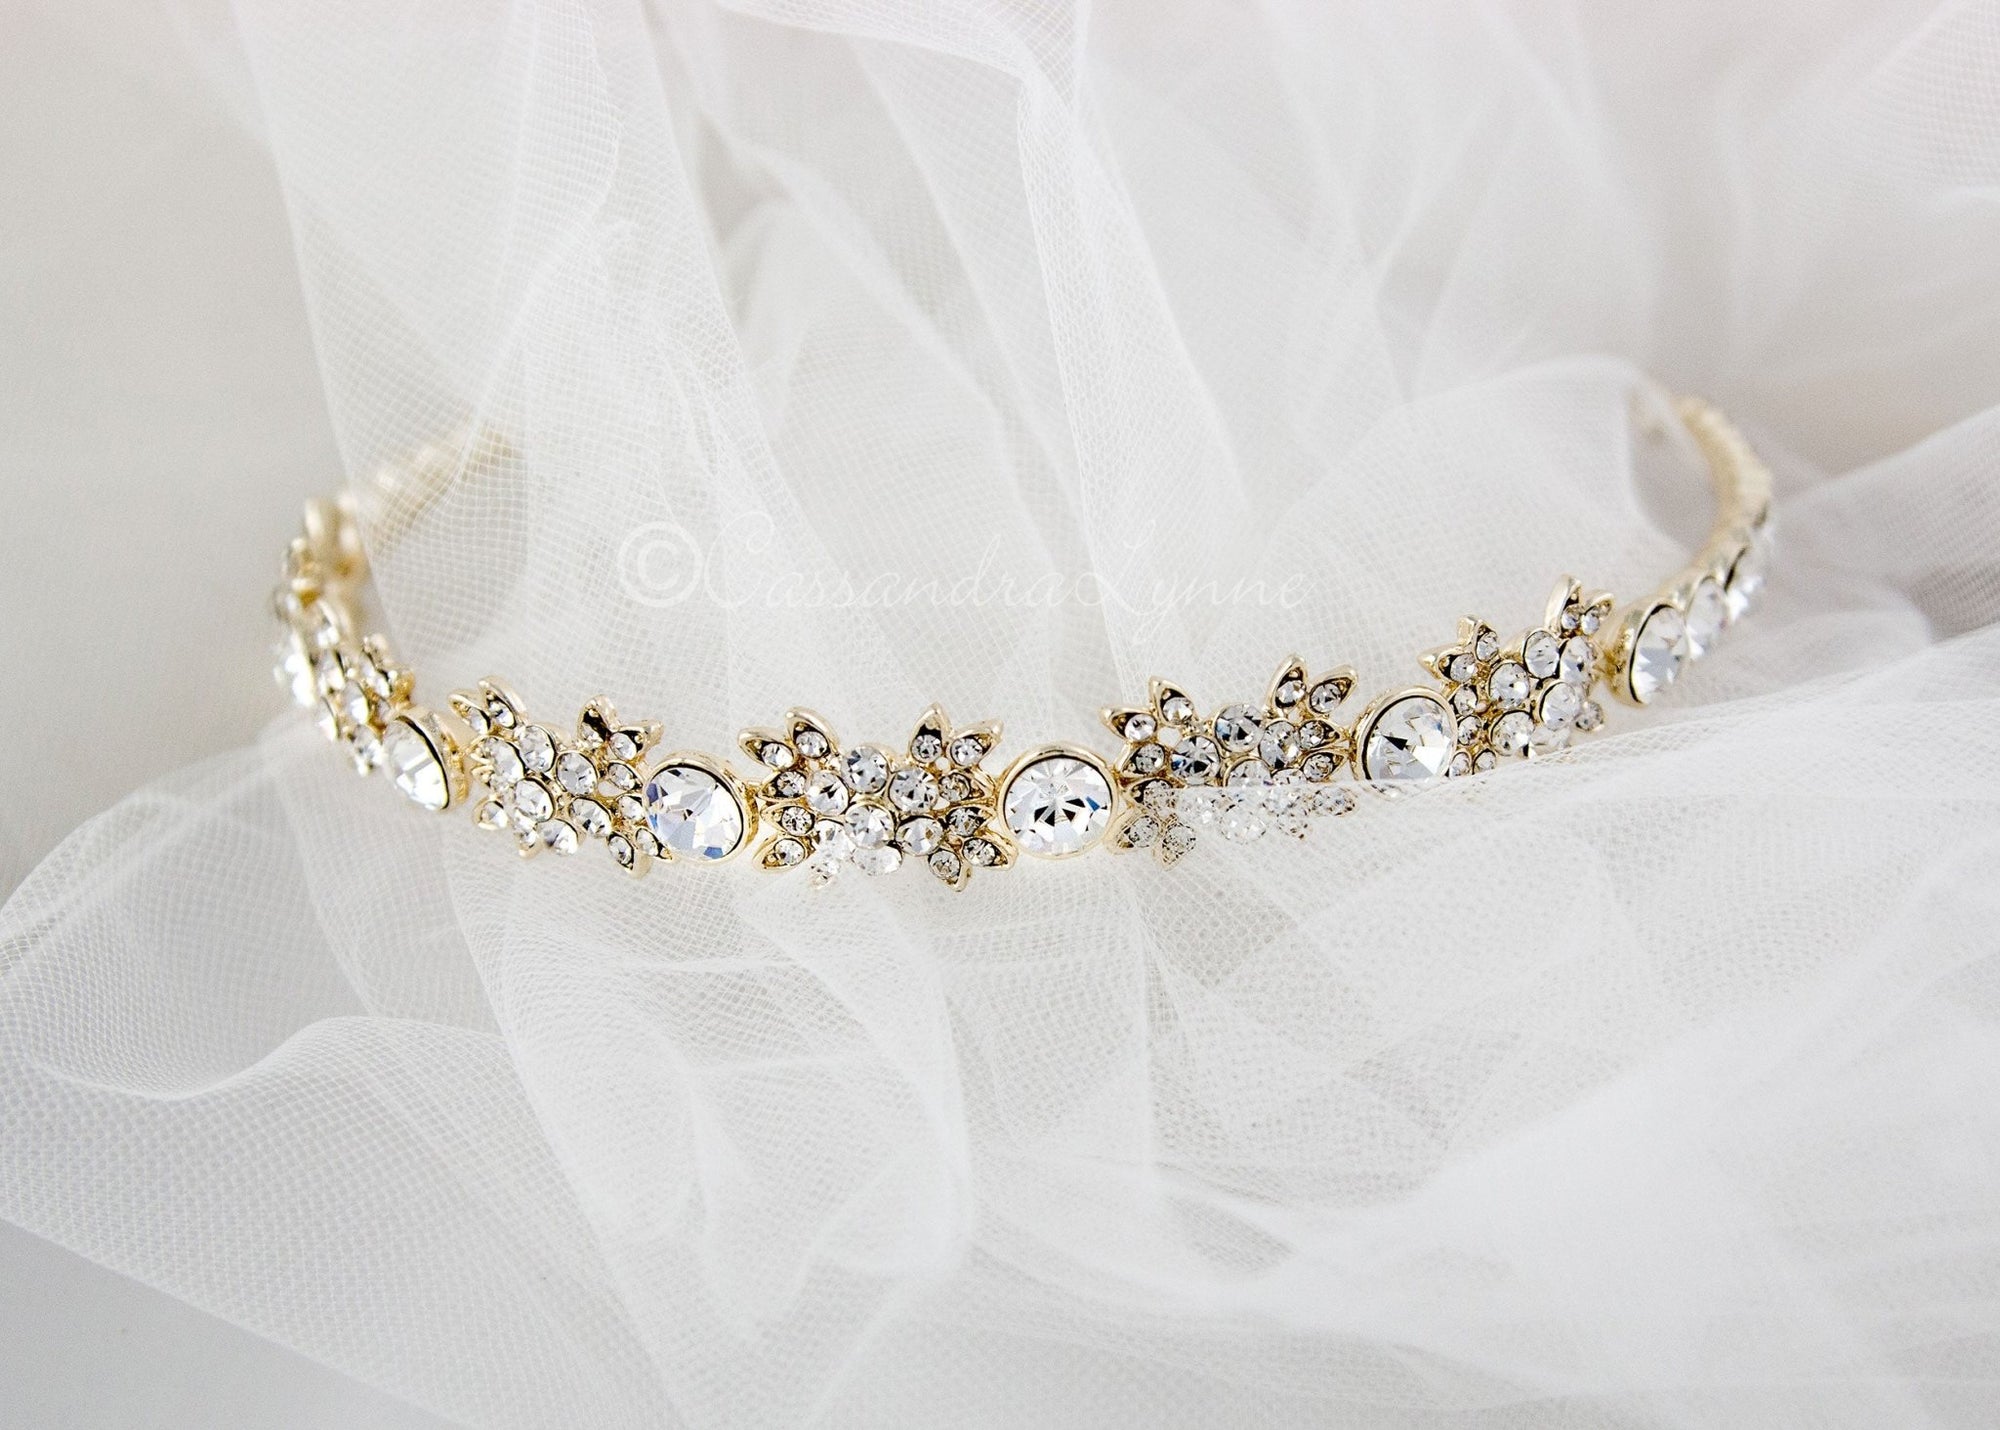 Bridal Headband with Round Jewels - Cassandra Lynne